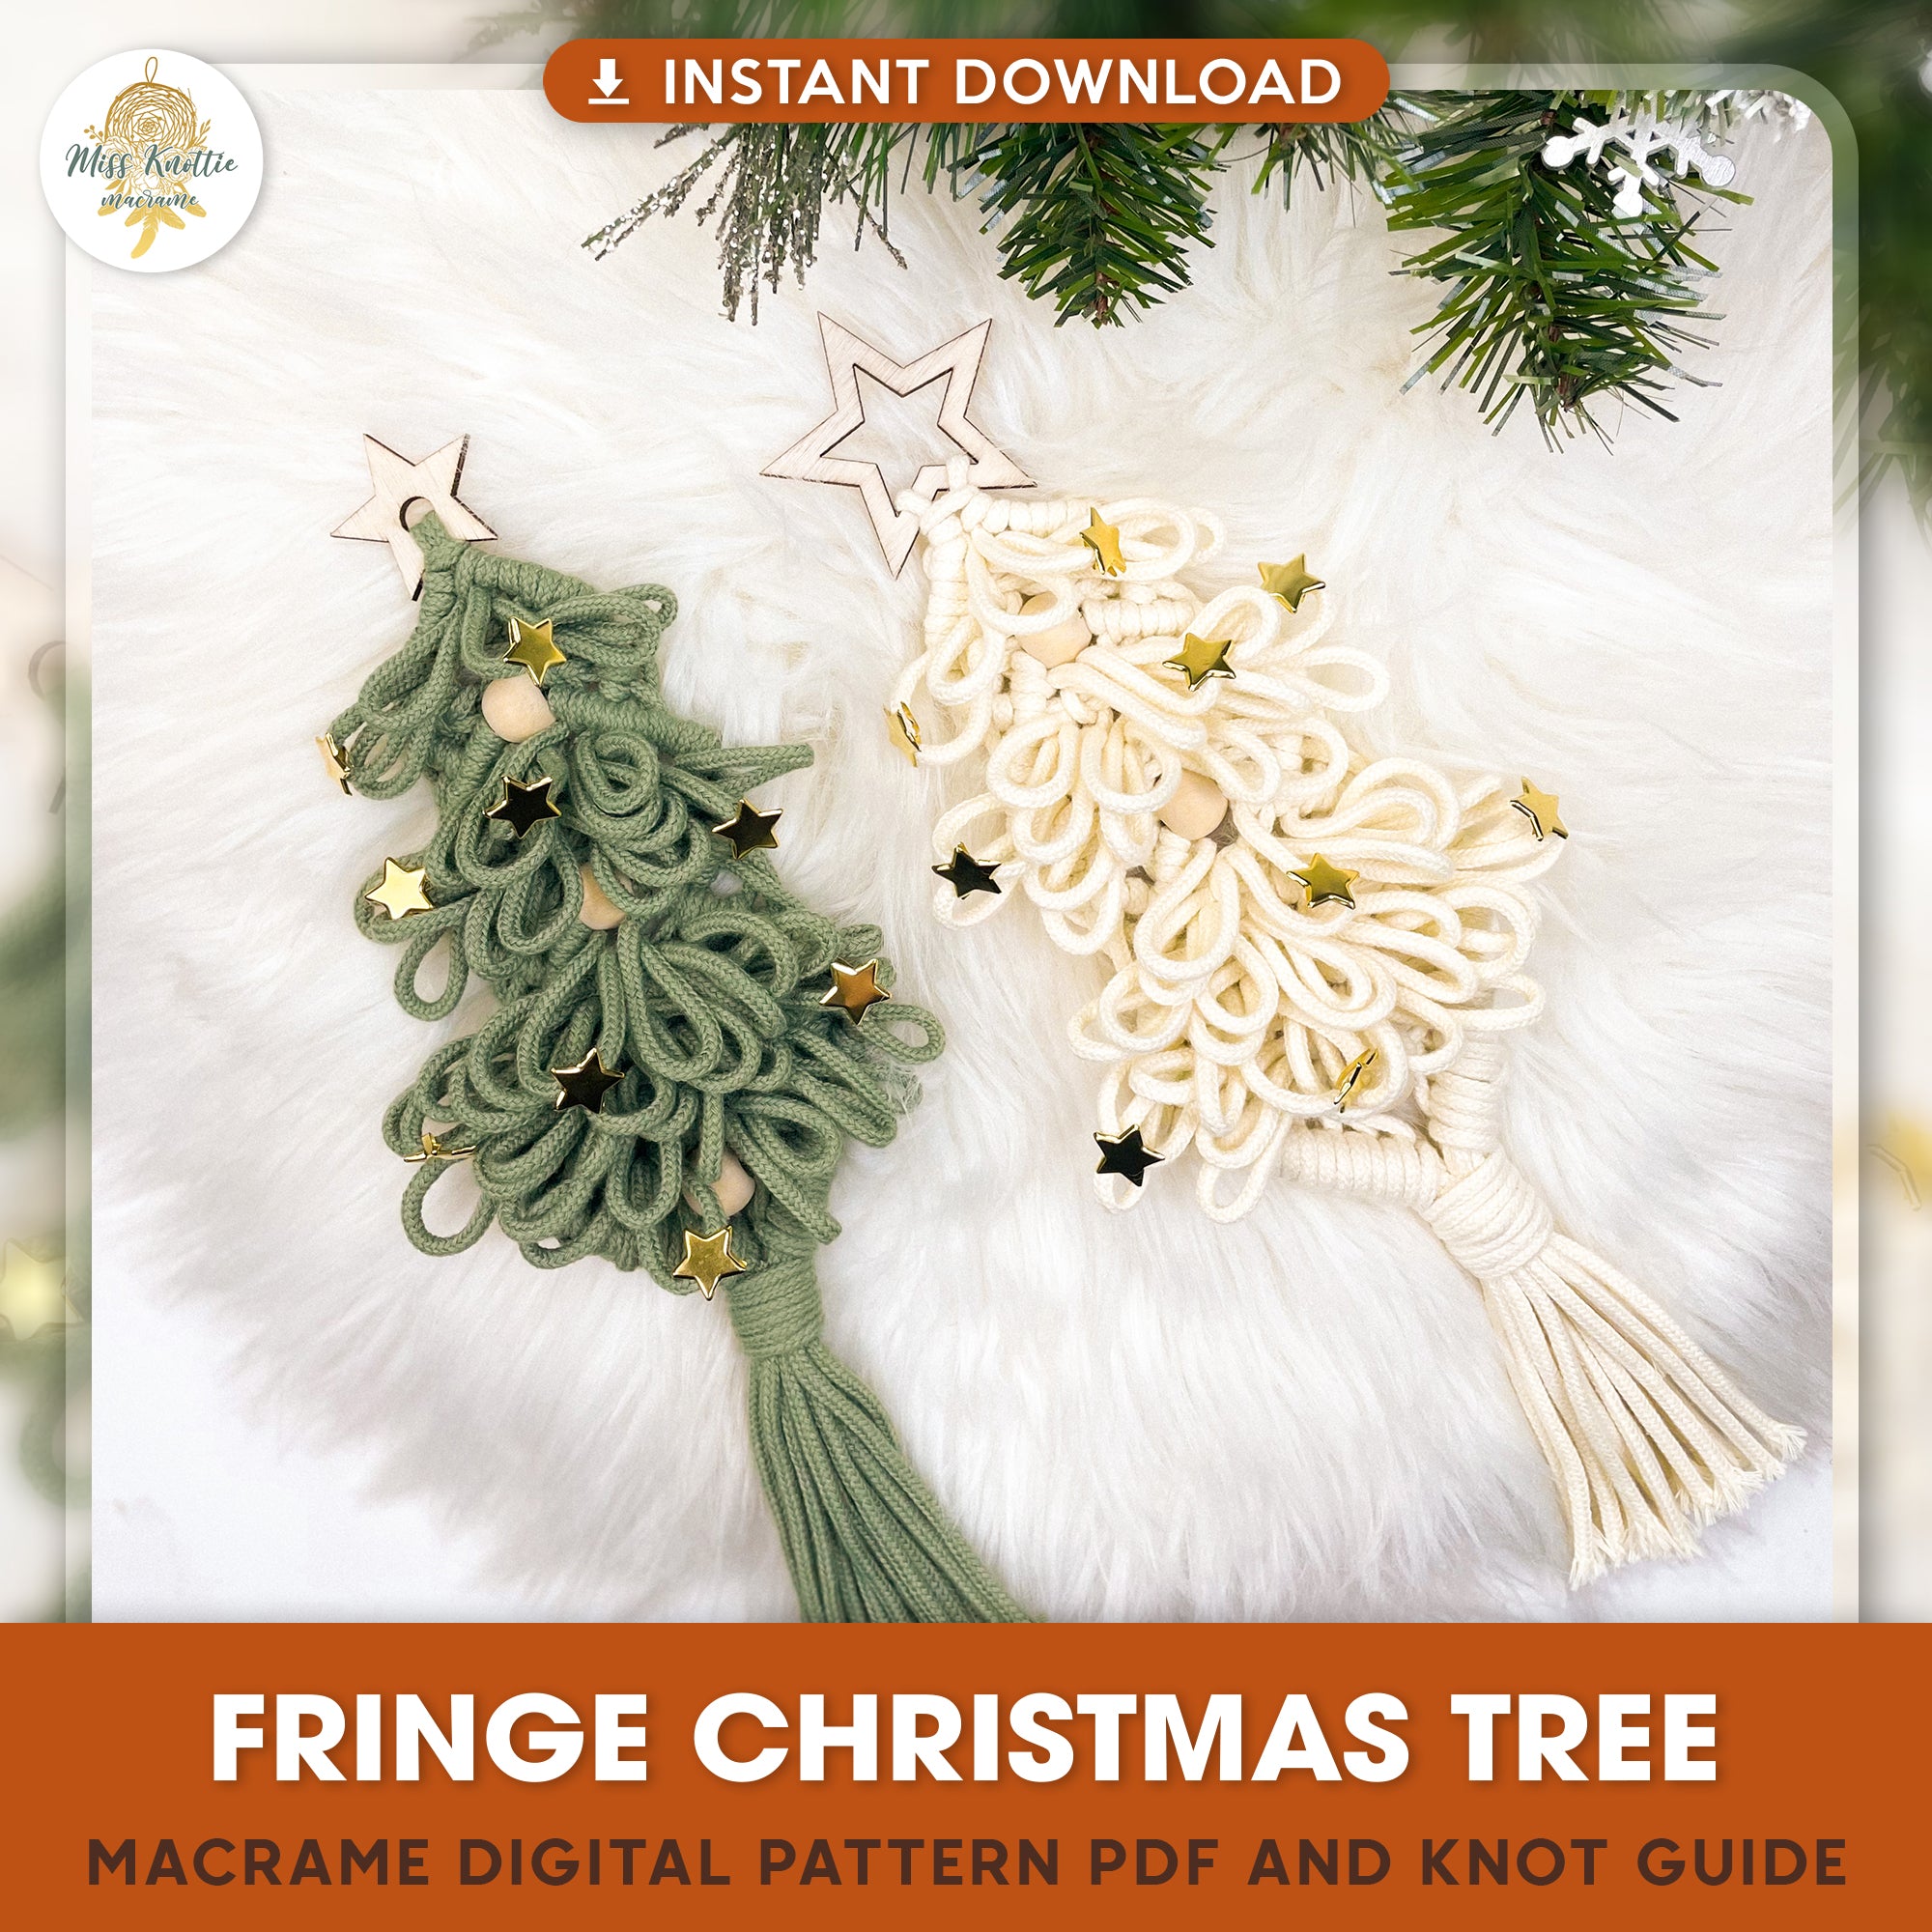 Macrame Fringe Christmas Tree - Digital PDF and Knot Guide